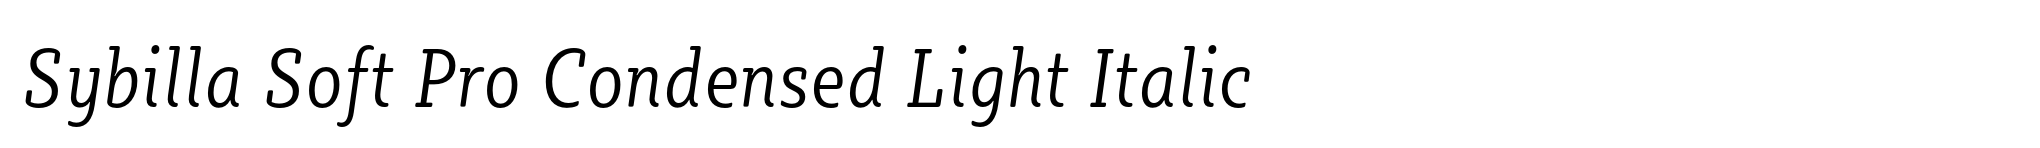 Sybilla Soft Pro Condensed Light Italic image